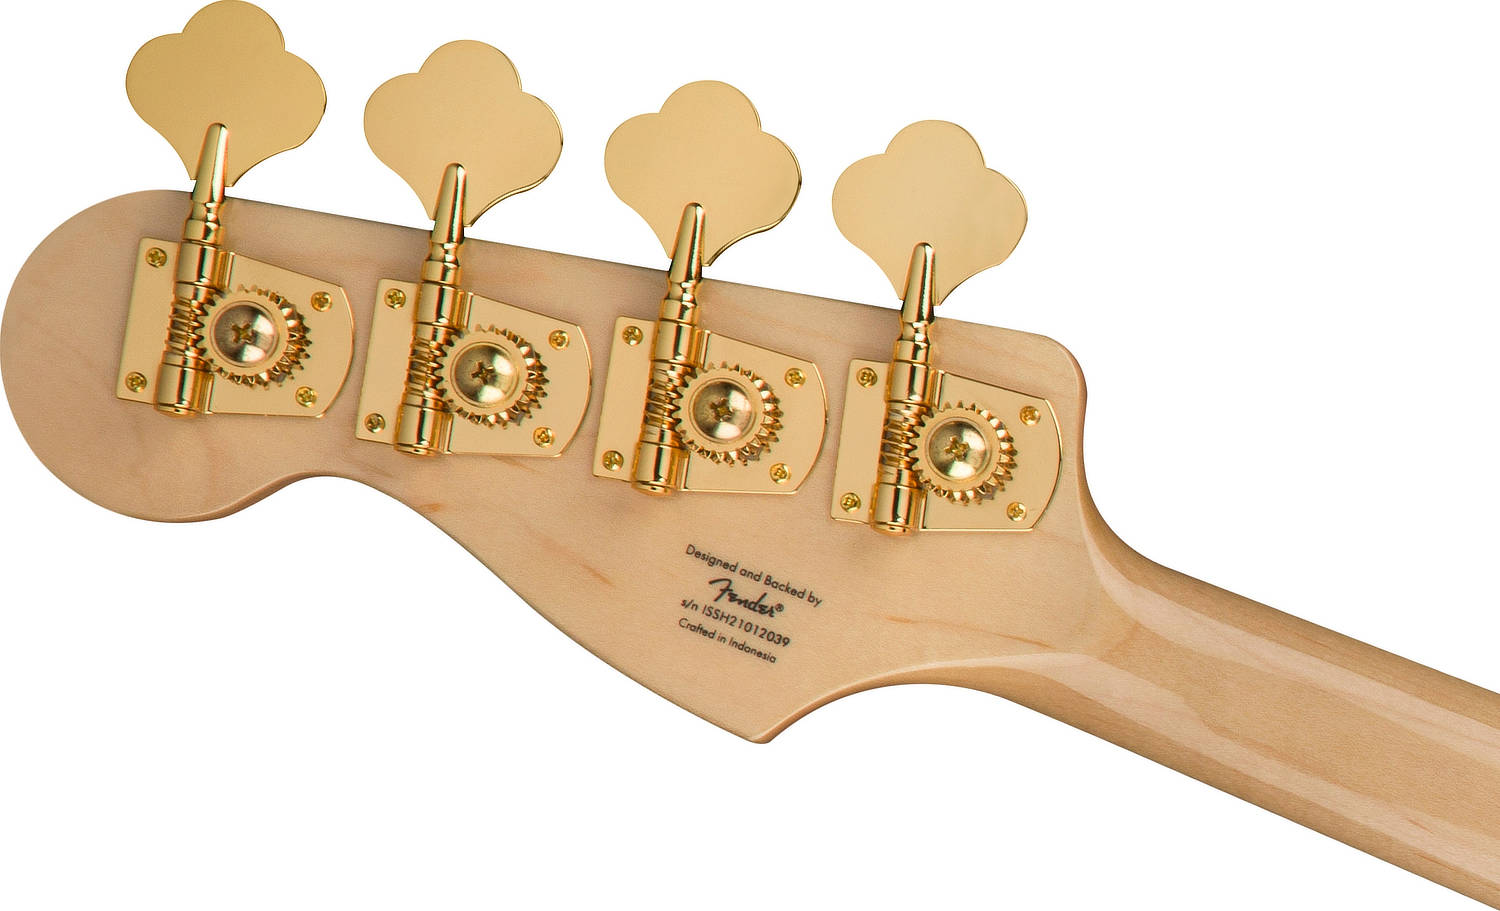 Squier 40th Anniversary Jazz Bass Gold Edition Bass Guitar